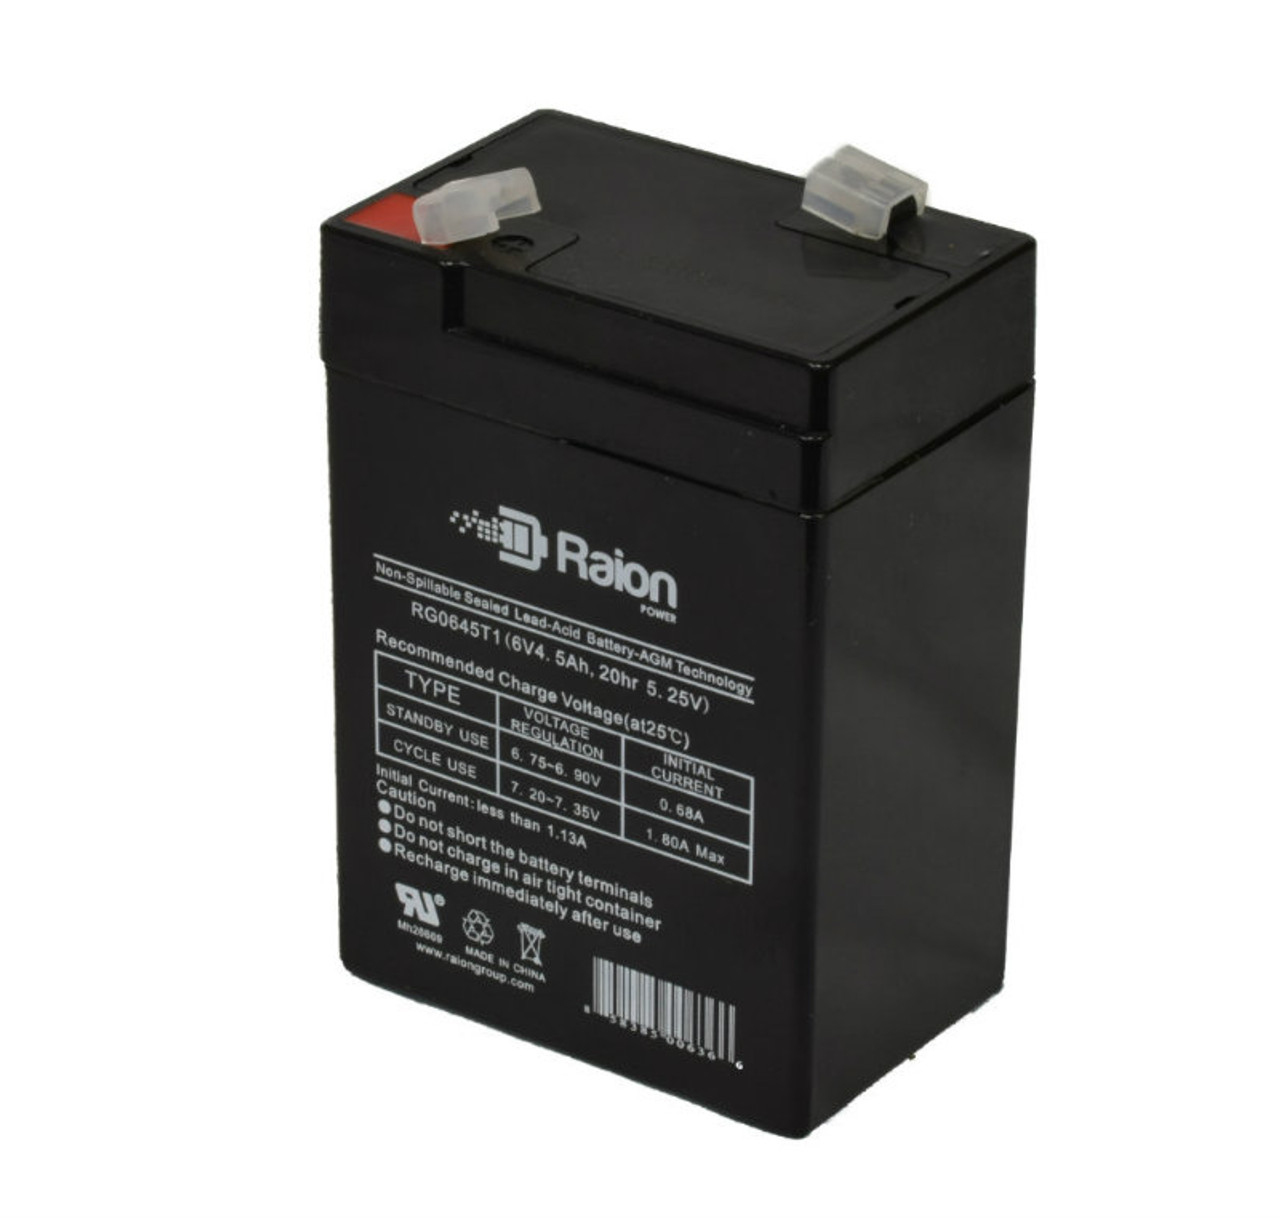 Raion Power RG0645T1 6V 4.5Ah Replacement Battery Cartridge for Sure-Lites VP12